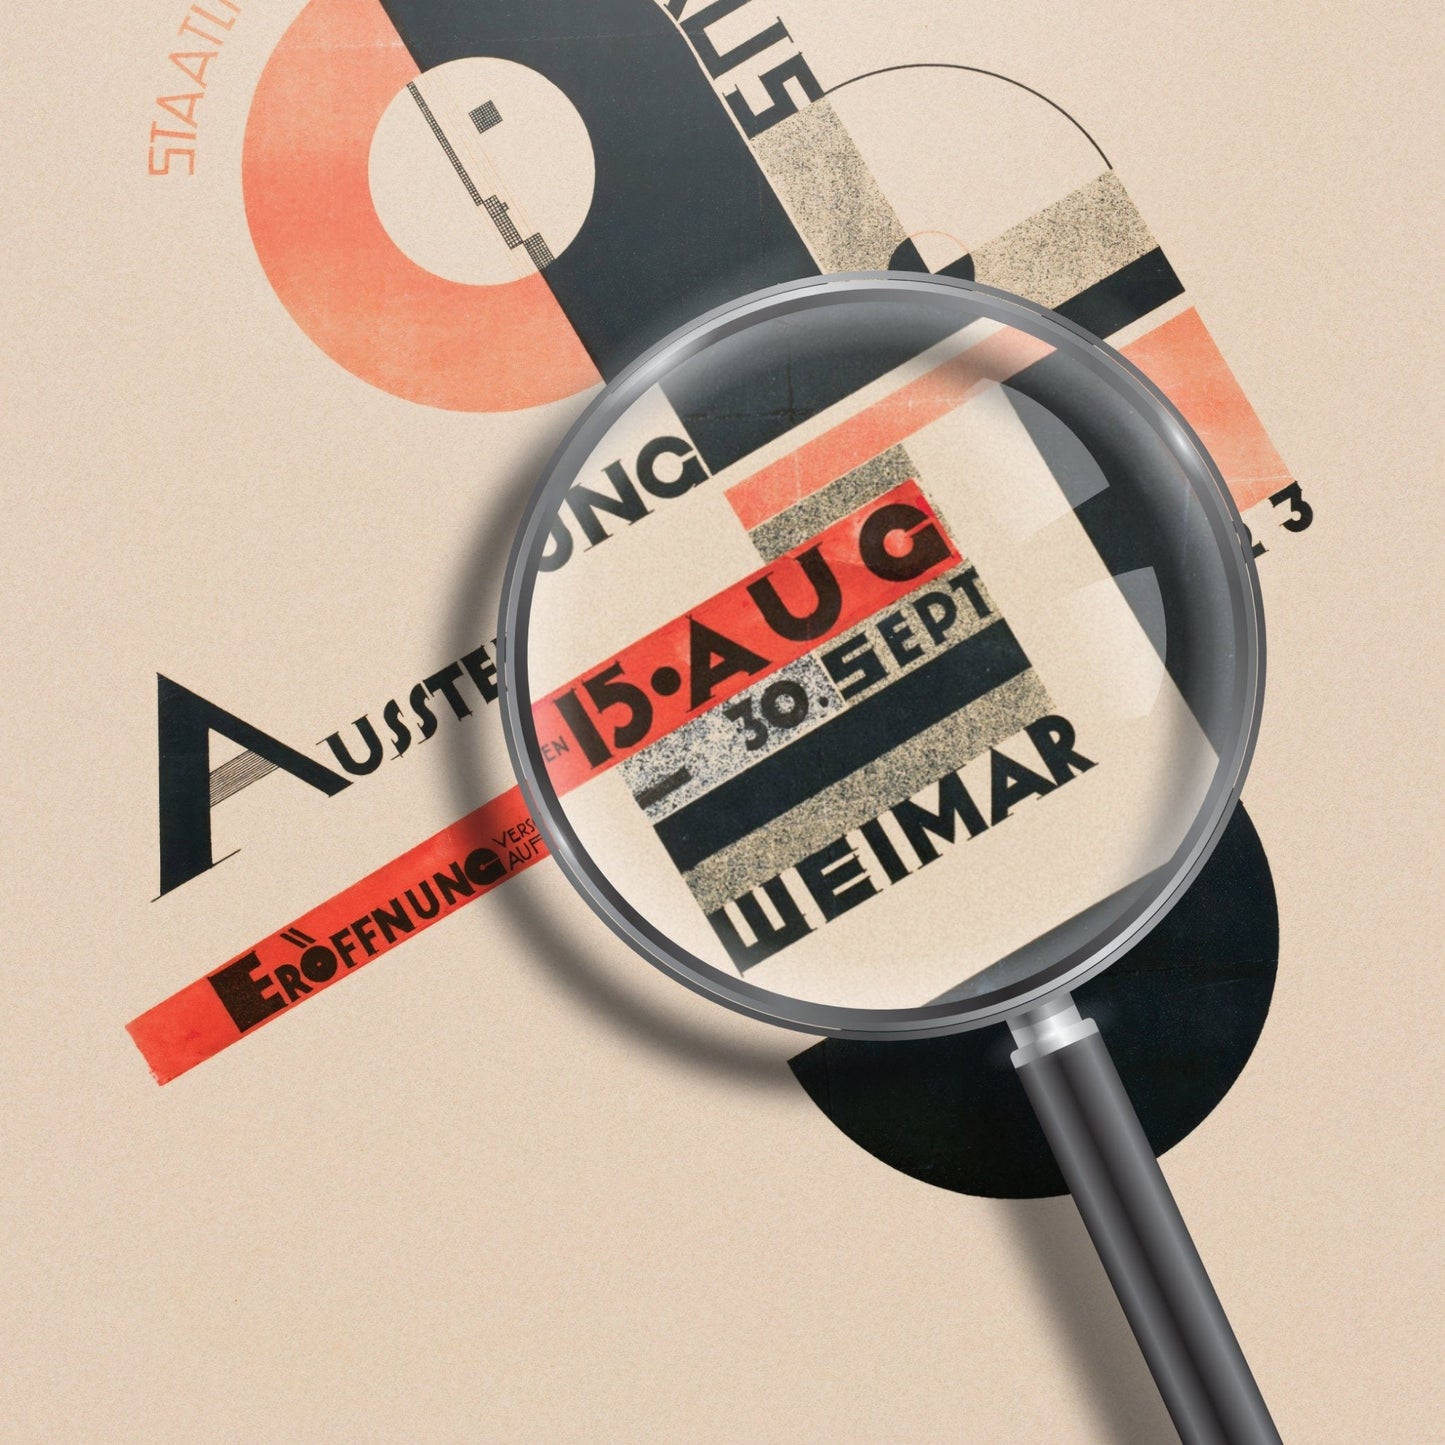 JOOST SCHMIDT - Bauhaus Weimar Ausstellung 1923 Vintage Poster